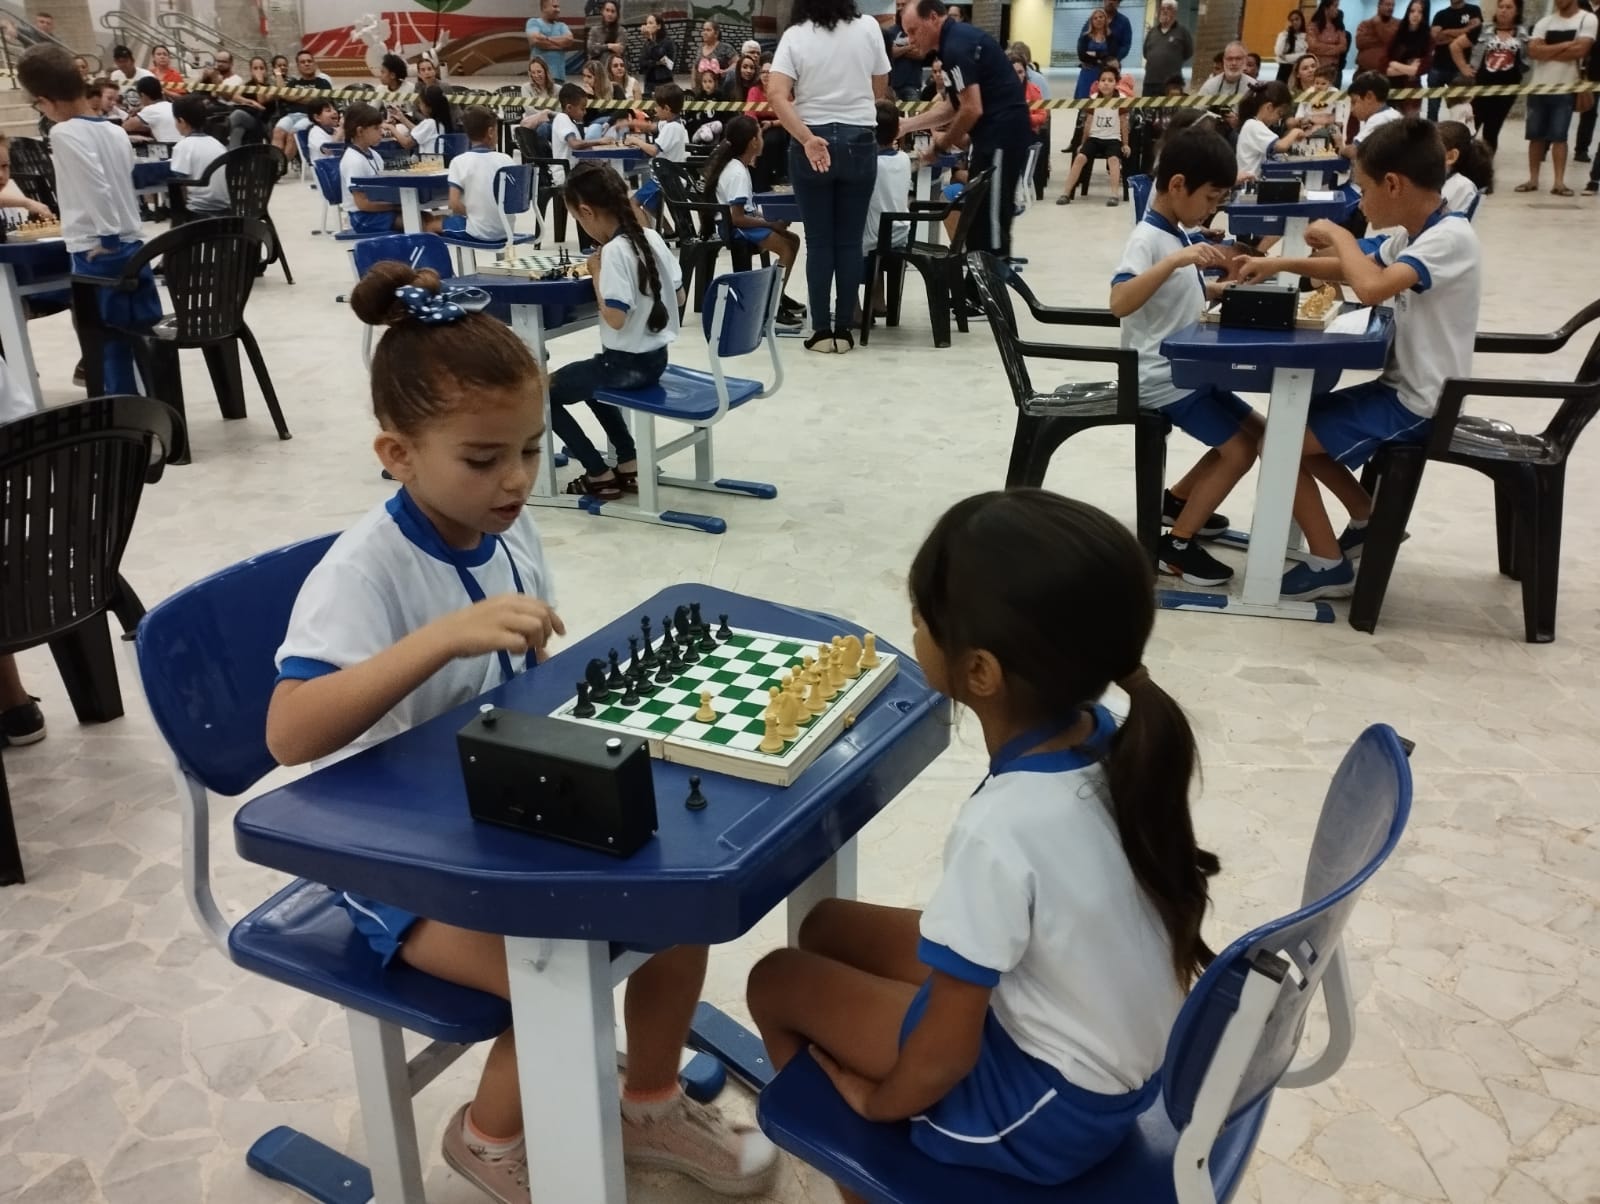 Conheça as escolas vencedoras da Final Municipal de Xadrez por